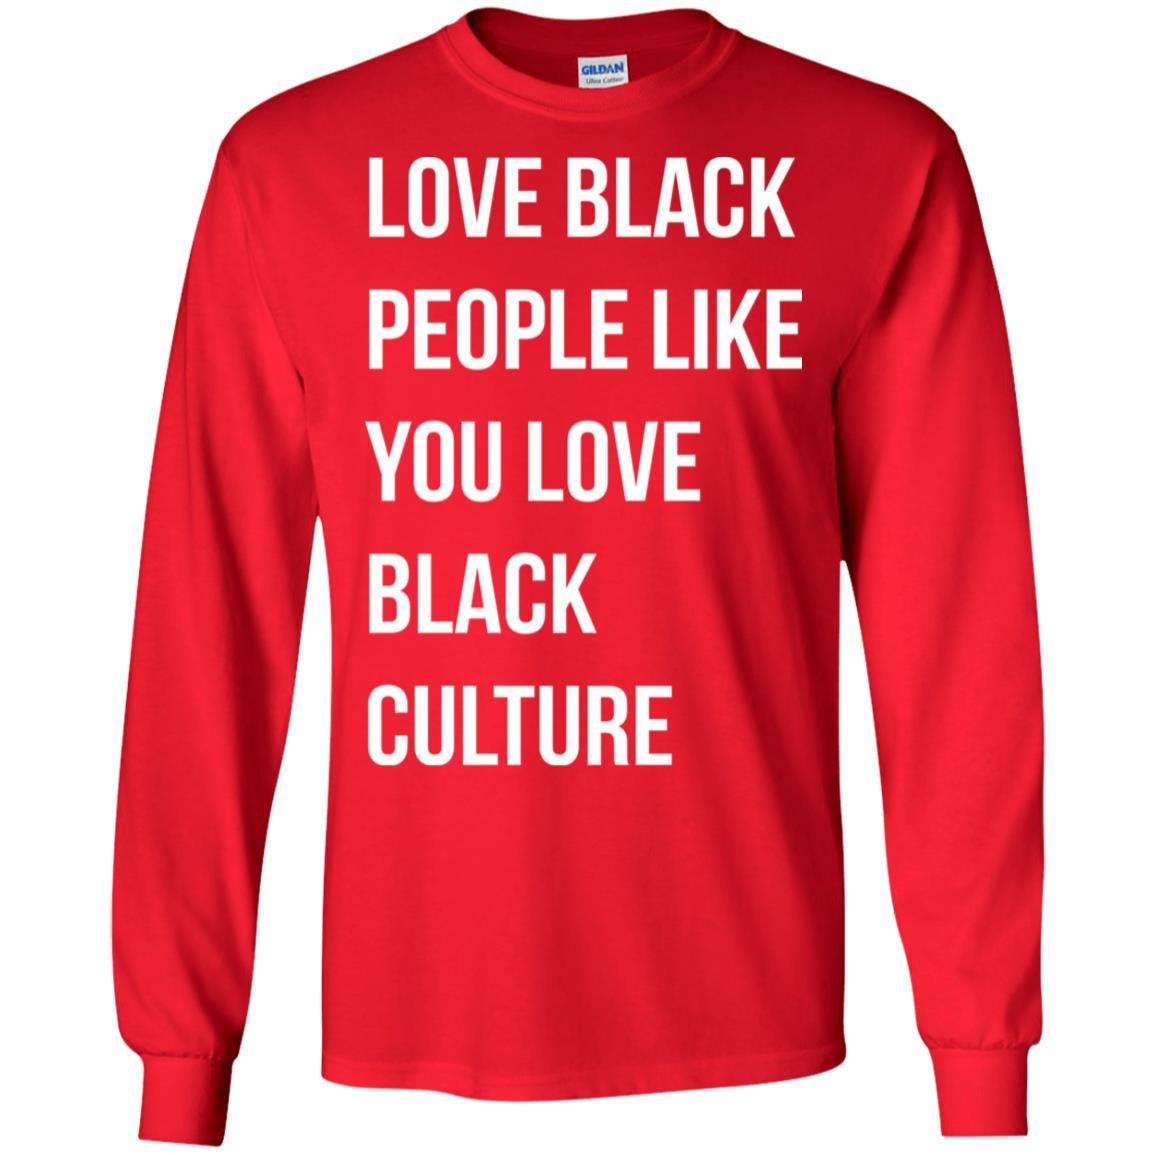 Love black people like you love black culture shirt 1